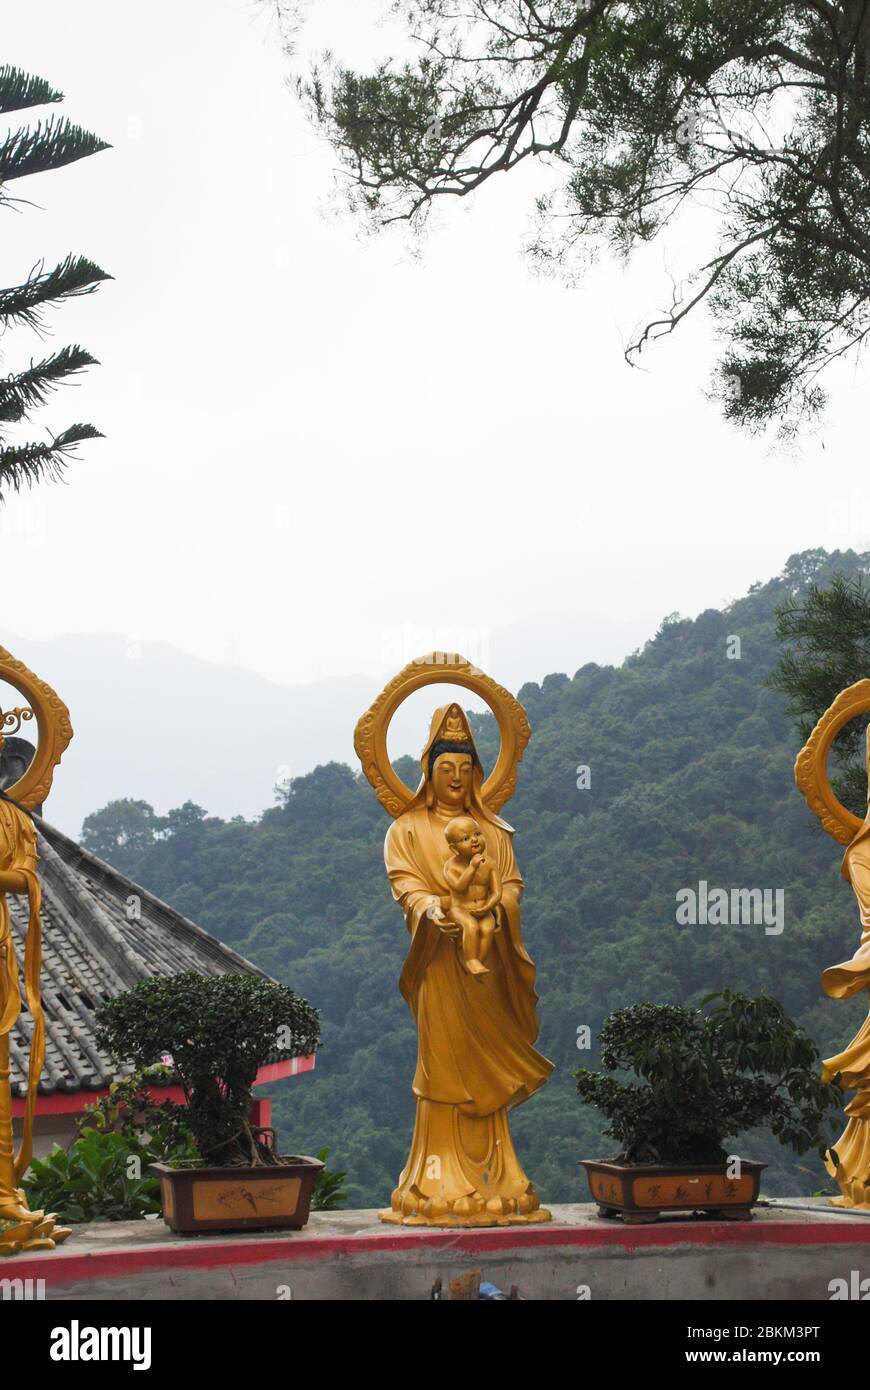 Uomo grasso Sze Monastero di Ten Thousand Buddha, 220 Pai Tau Village, Sha Tin, Hong Kong Gold Buddha statue buddista buddismo buddista architettura culto Foto Stock